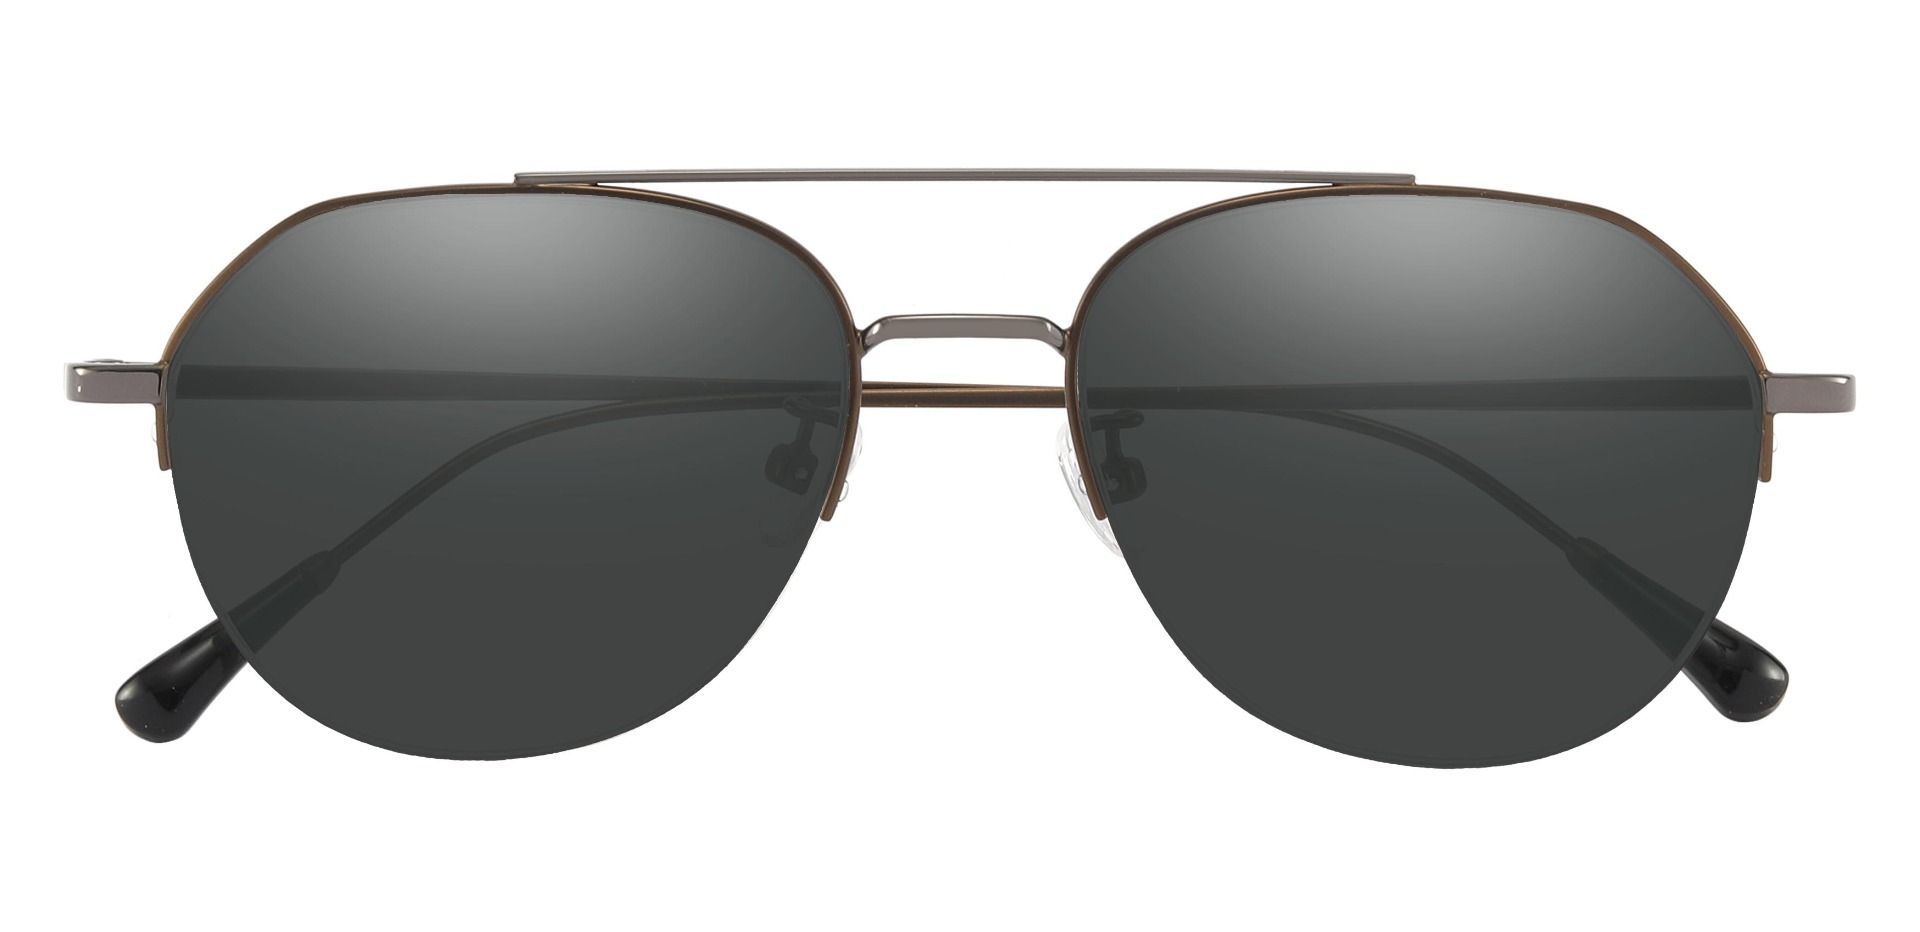 Waldorf Aviator Prescription Sunglasses - Brown Frame With Gray Lenses